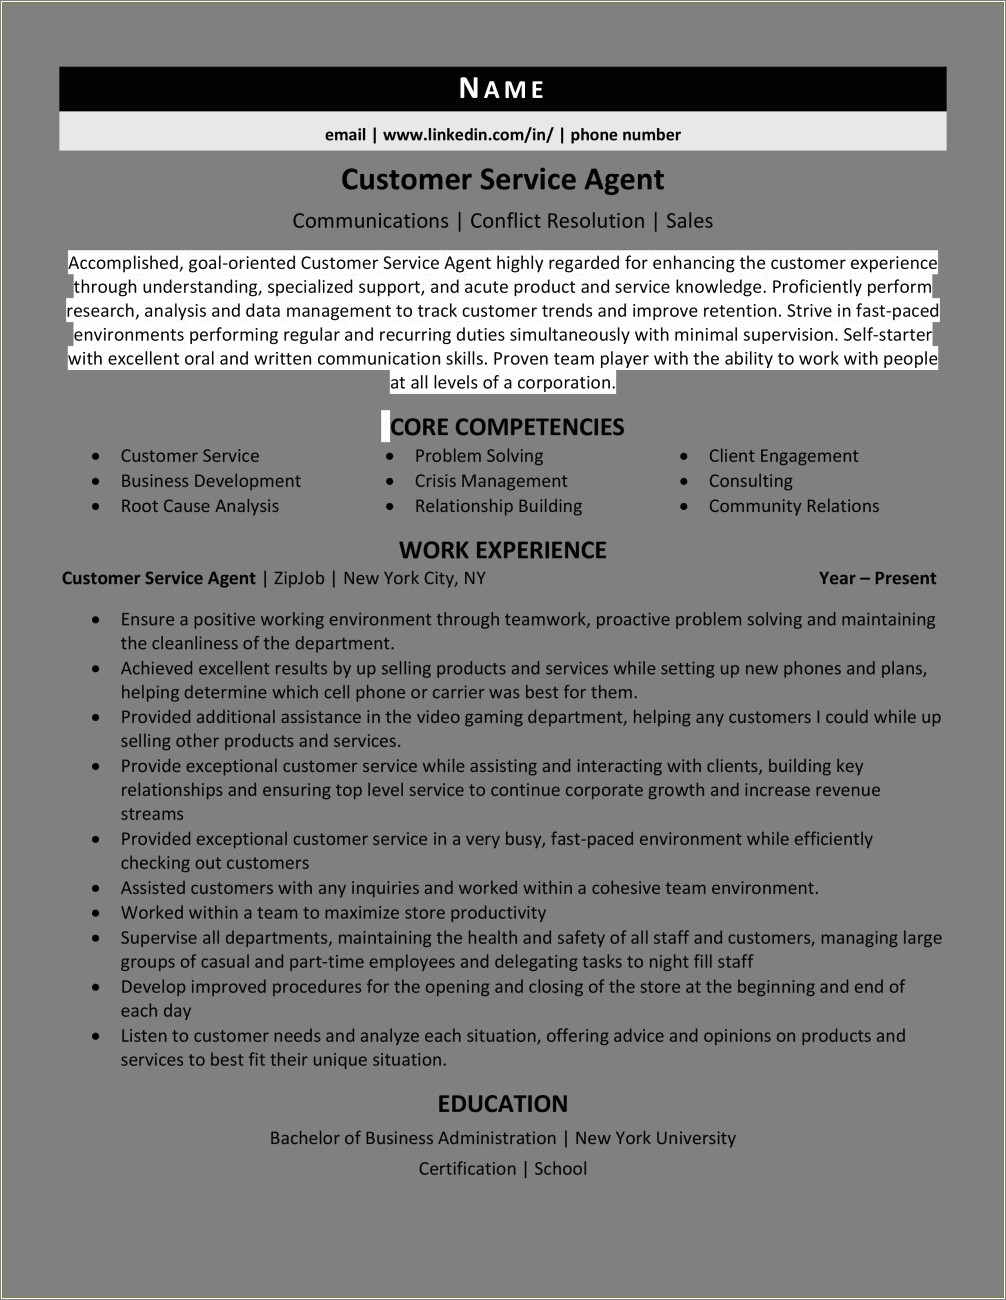 Job Discription Customer Service Agent Resume